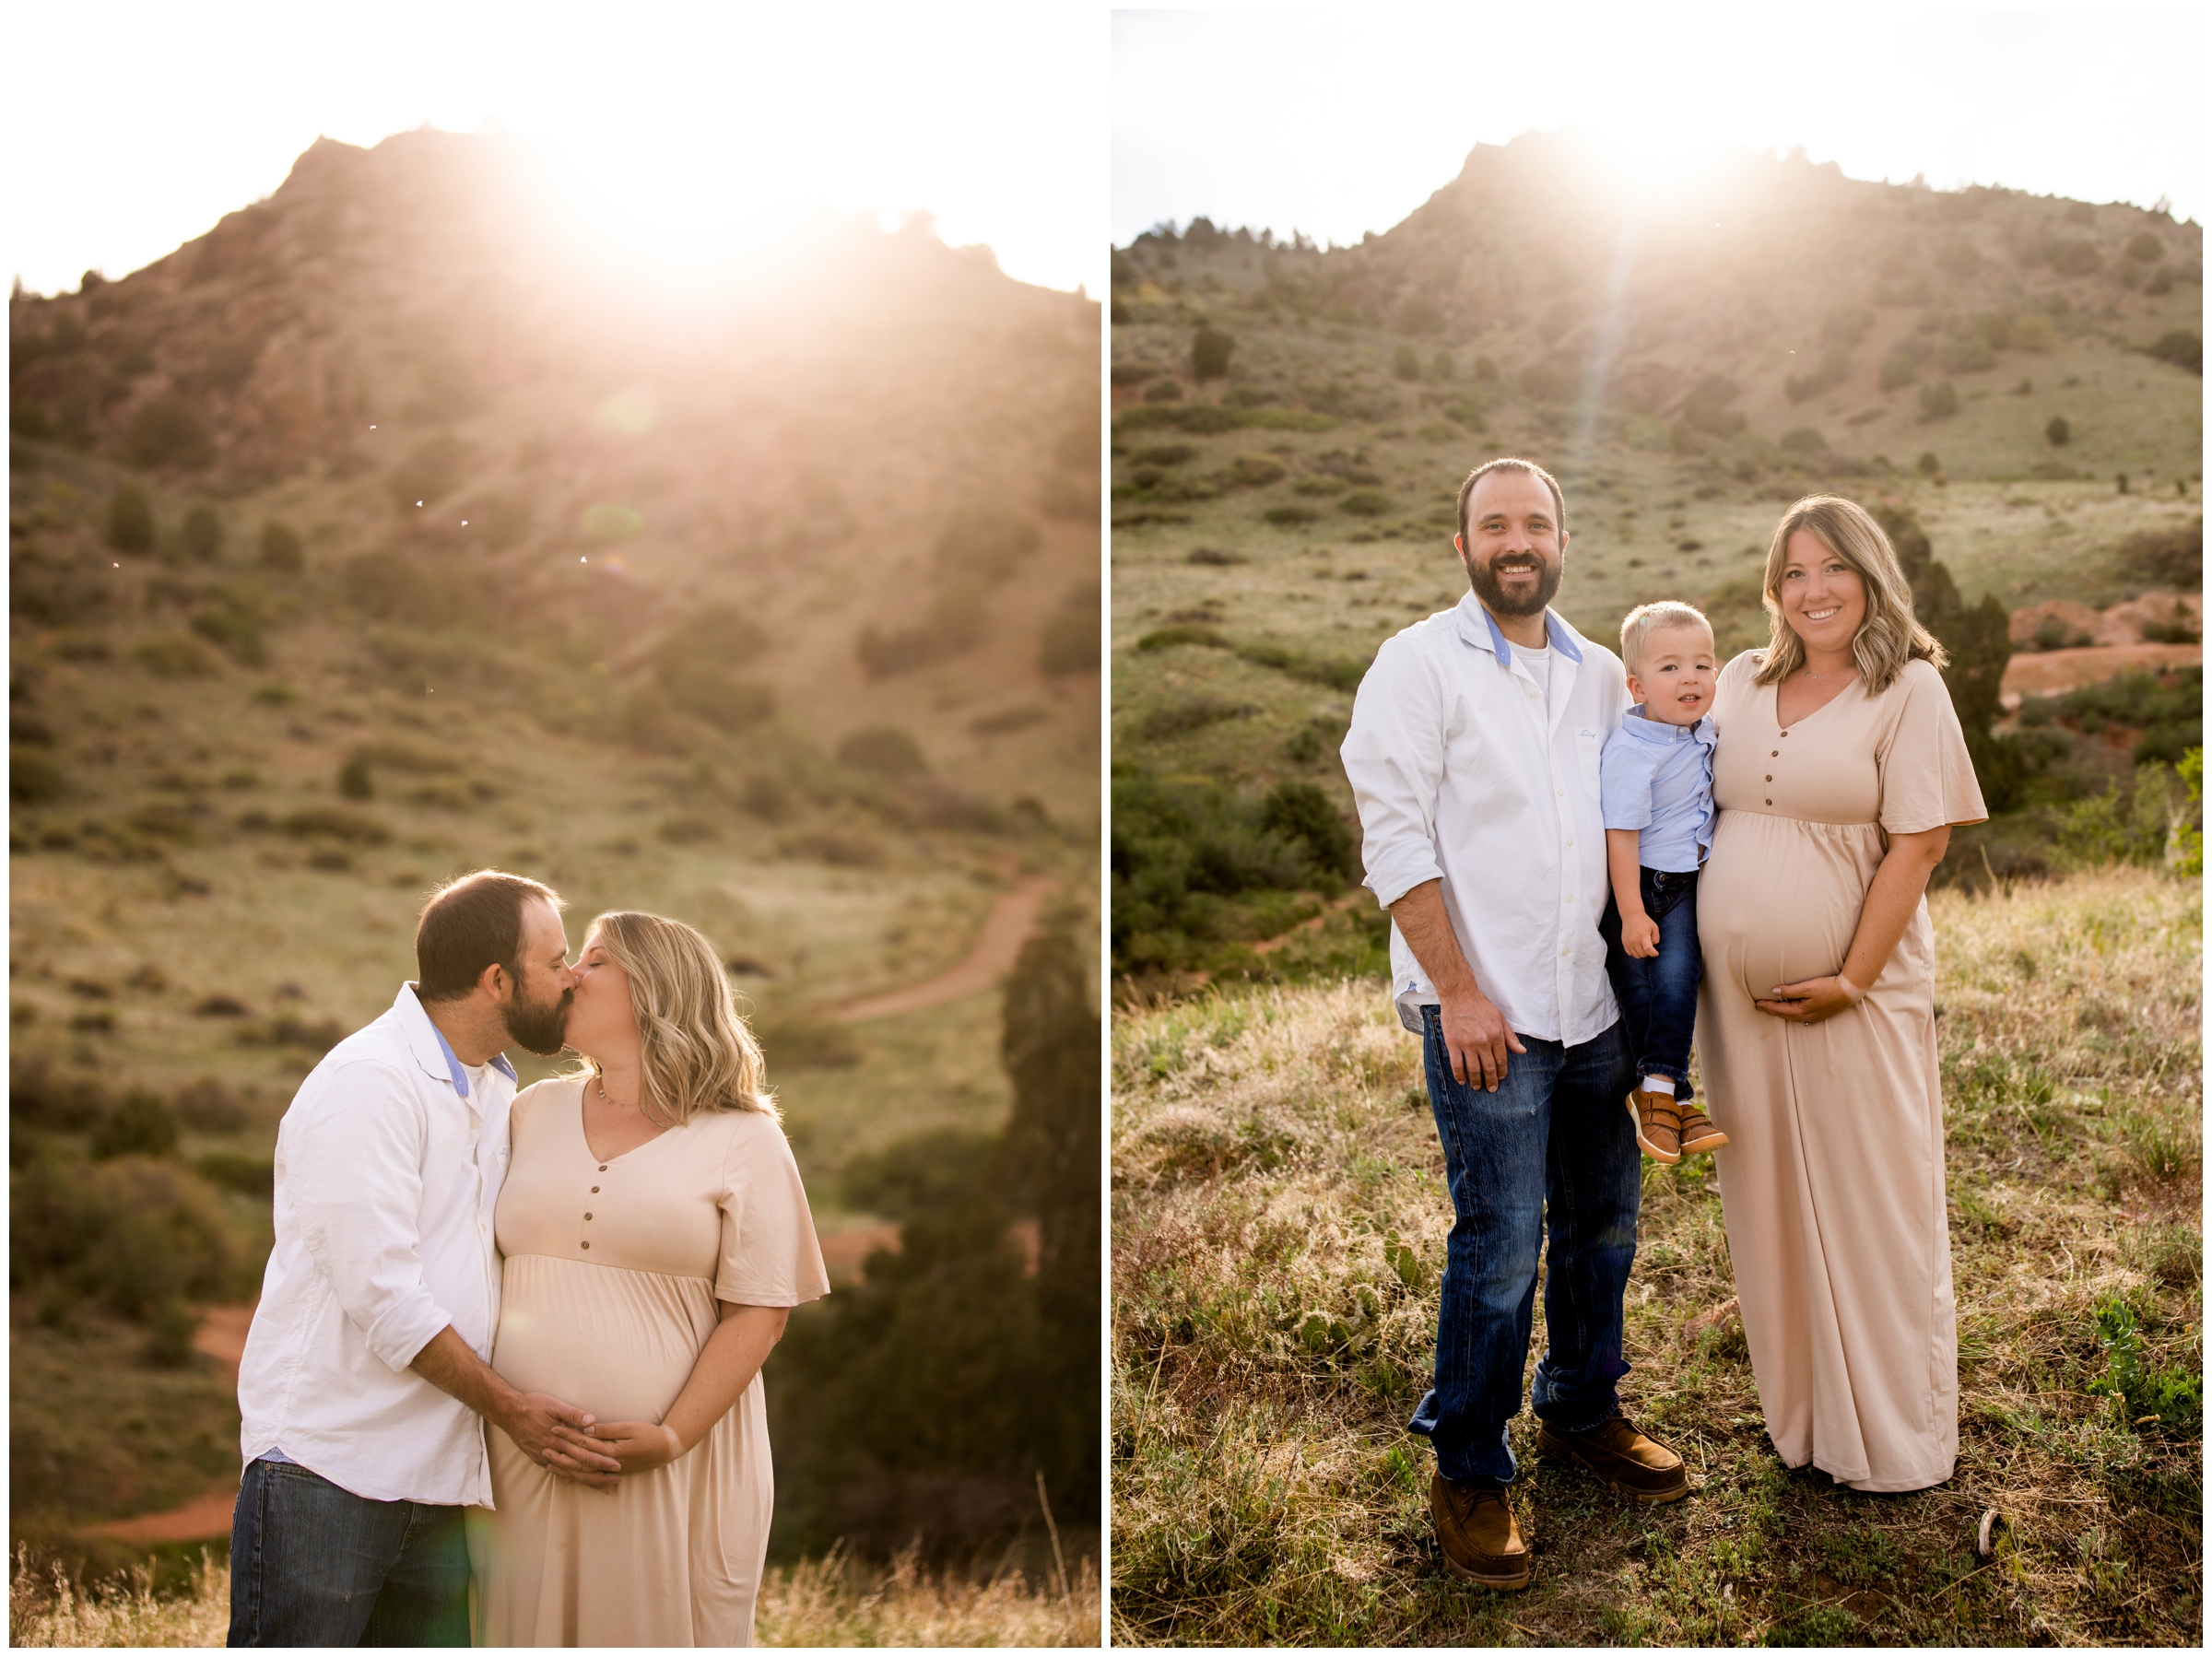 Colorado family maternity photos at Mount Falcon East by Denver portrait photographer Plum Pretty Photography